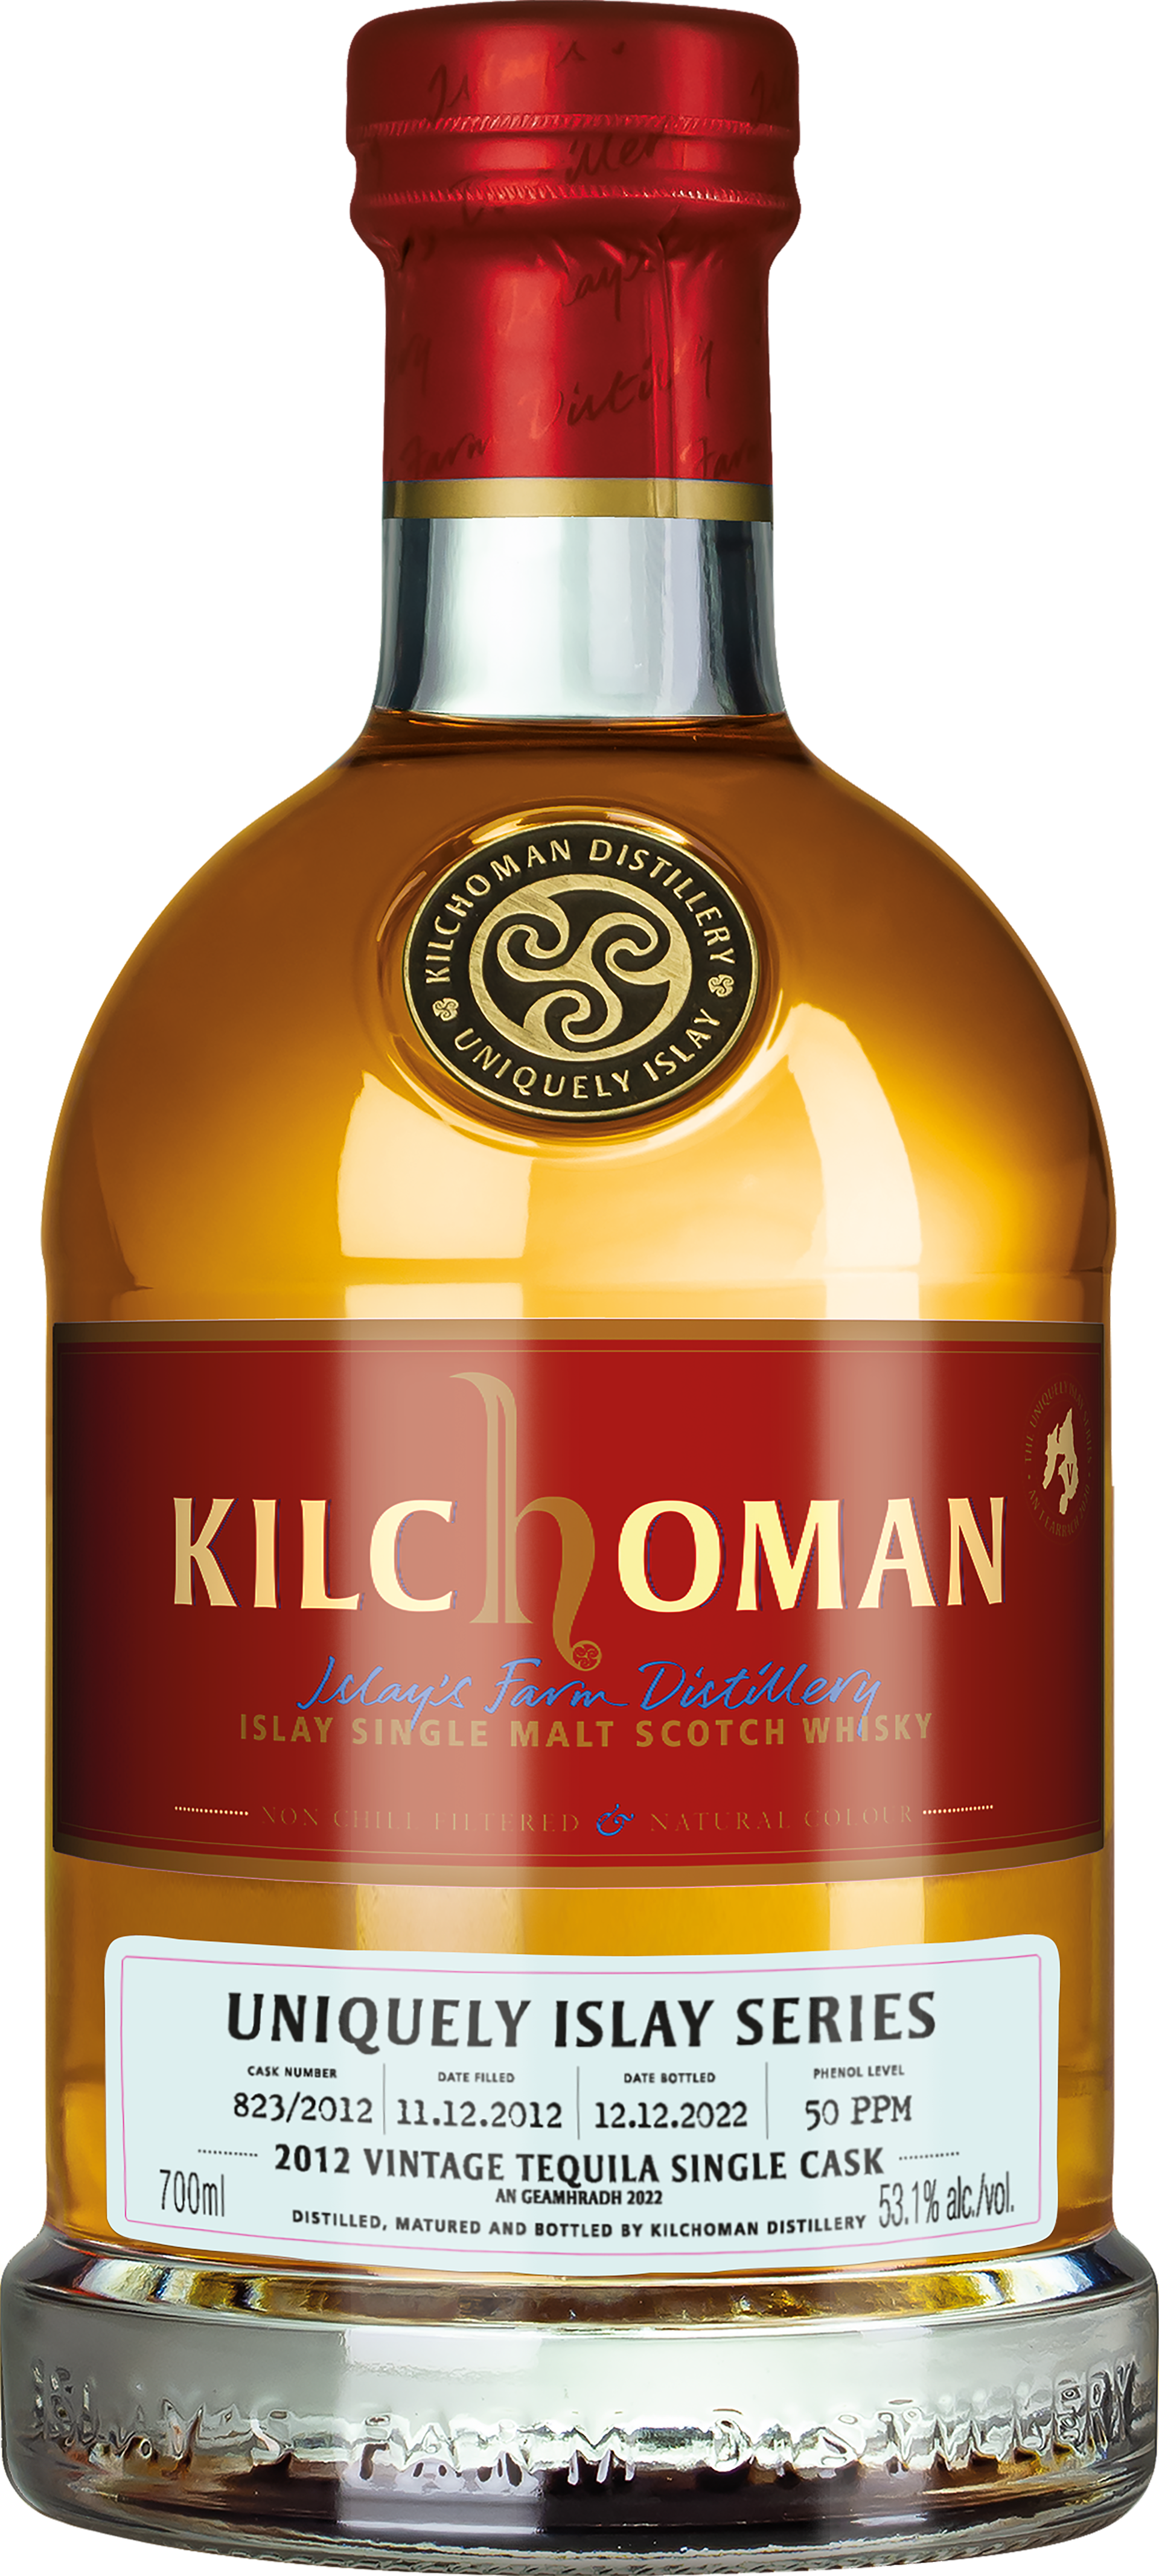 Kilchoman Uniquely Islay Series - 2012 Vintage Tequila Single Cask